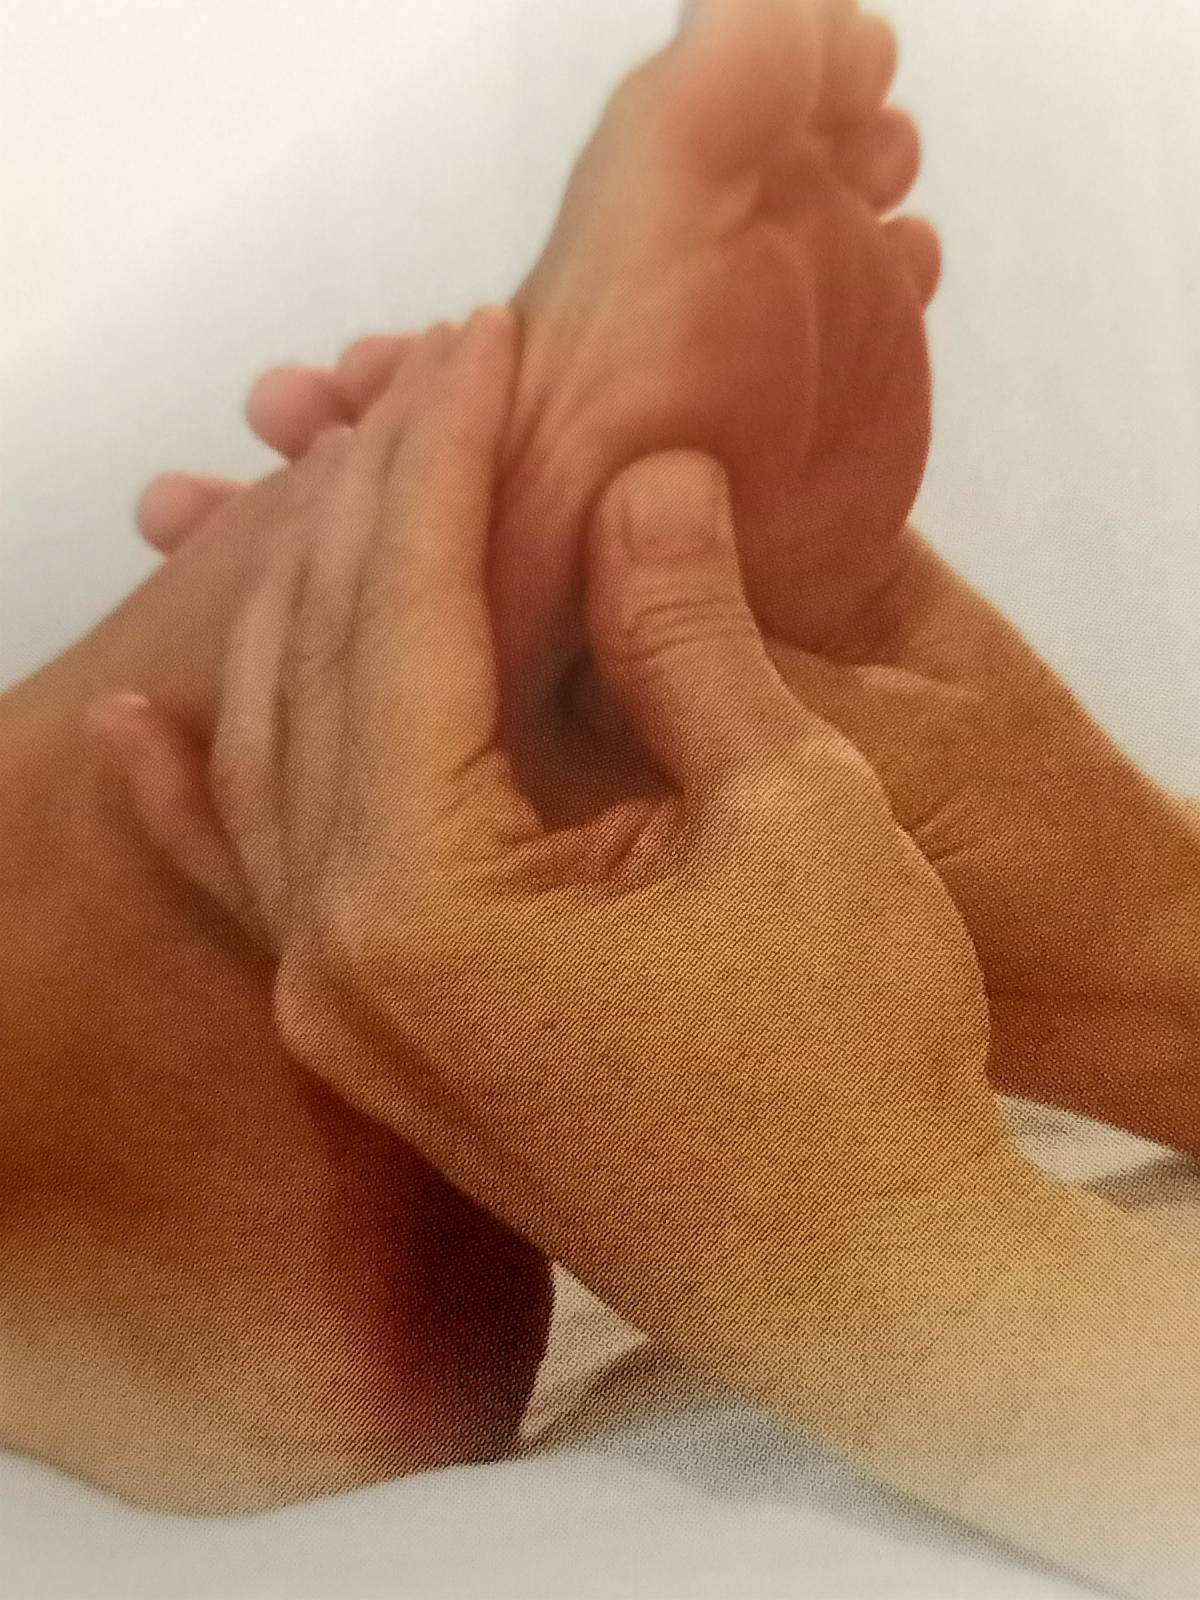 Ana Isabel Fernandes - Loures - Massagem Terapêutica